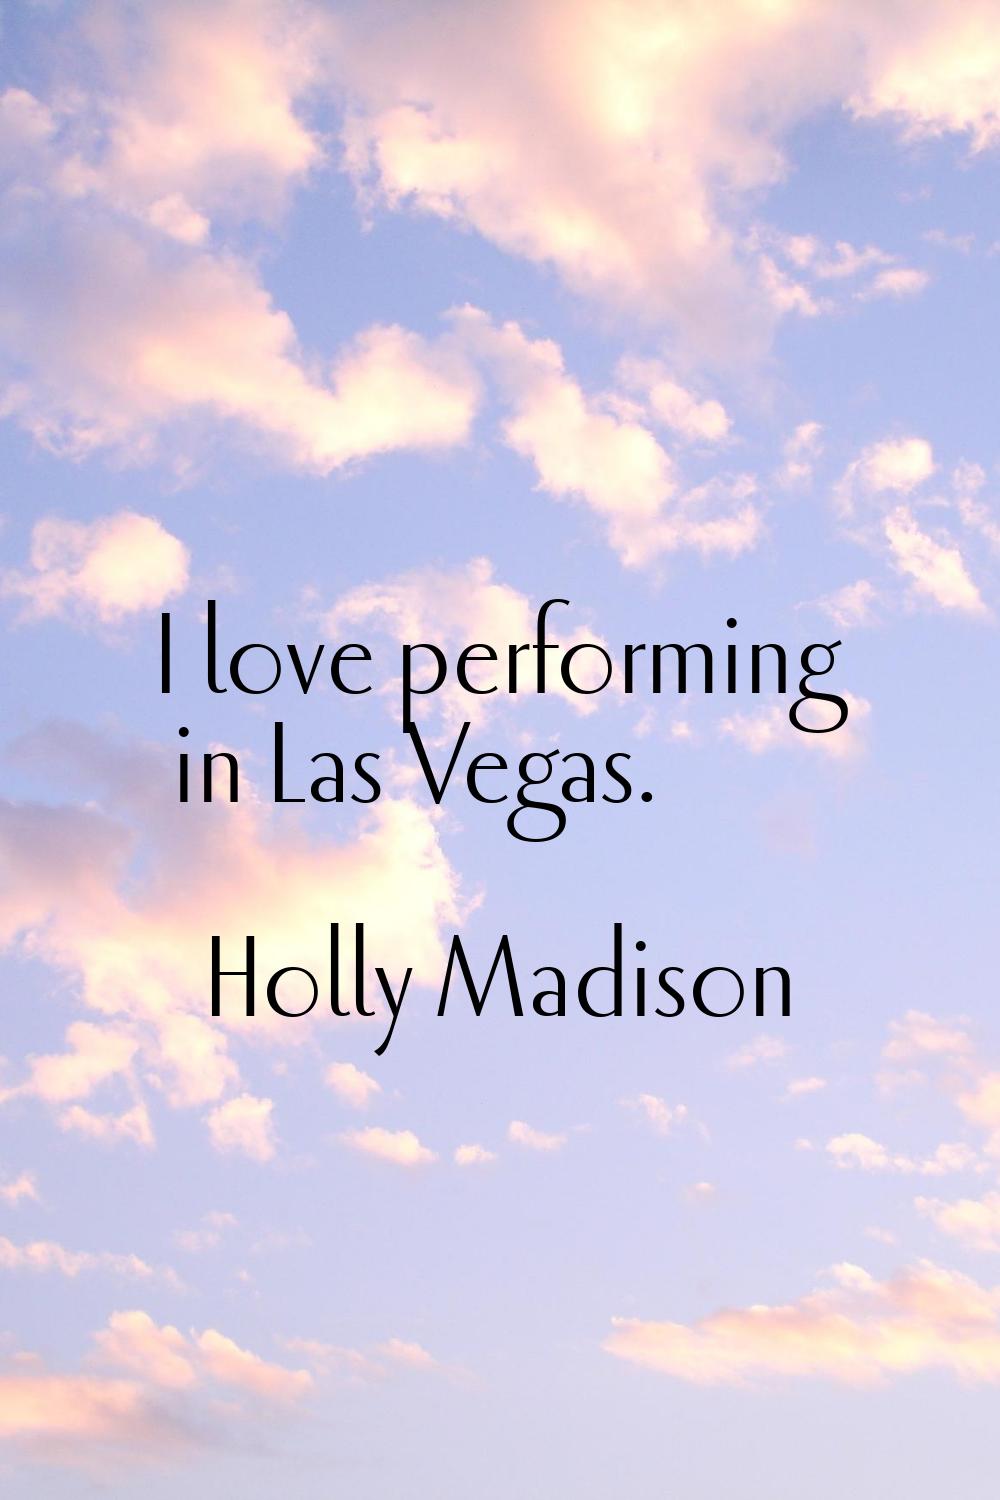 I love performing in Las Vegas.